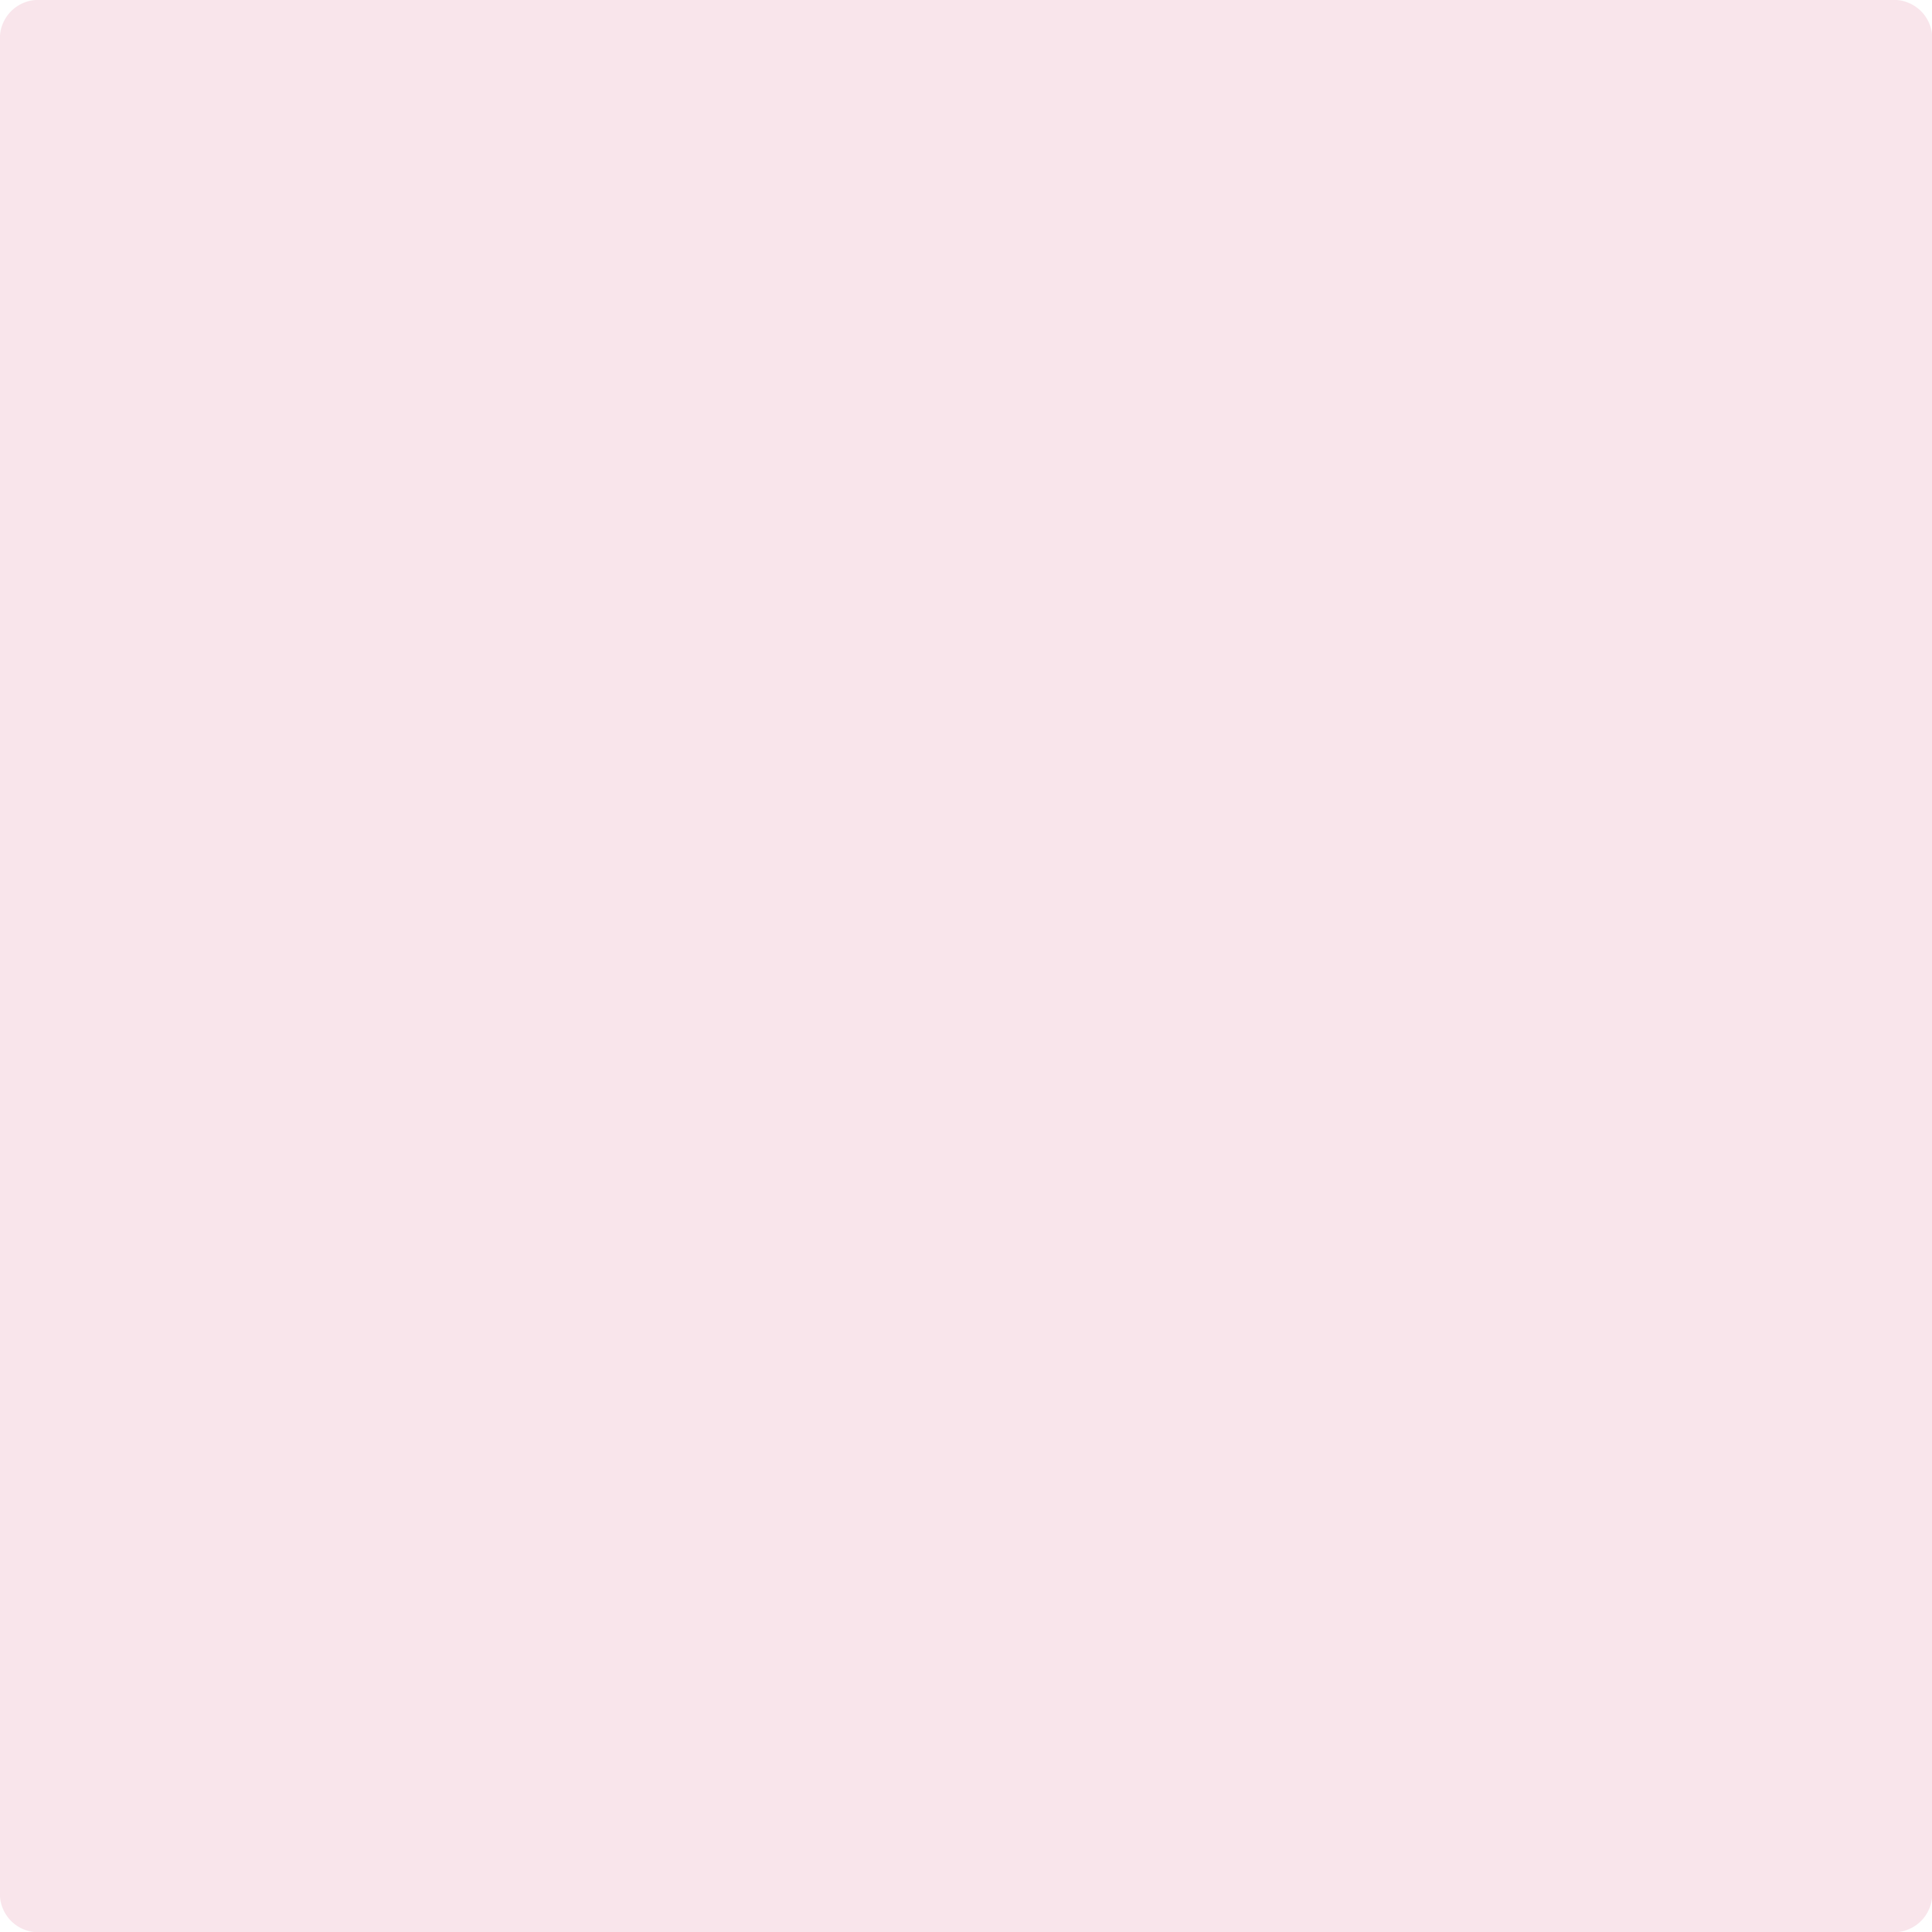 Meet Cute (Blush Pink Paint) - Exterior Trim Paint - Gal